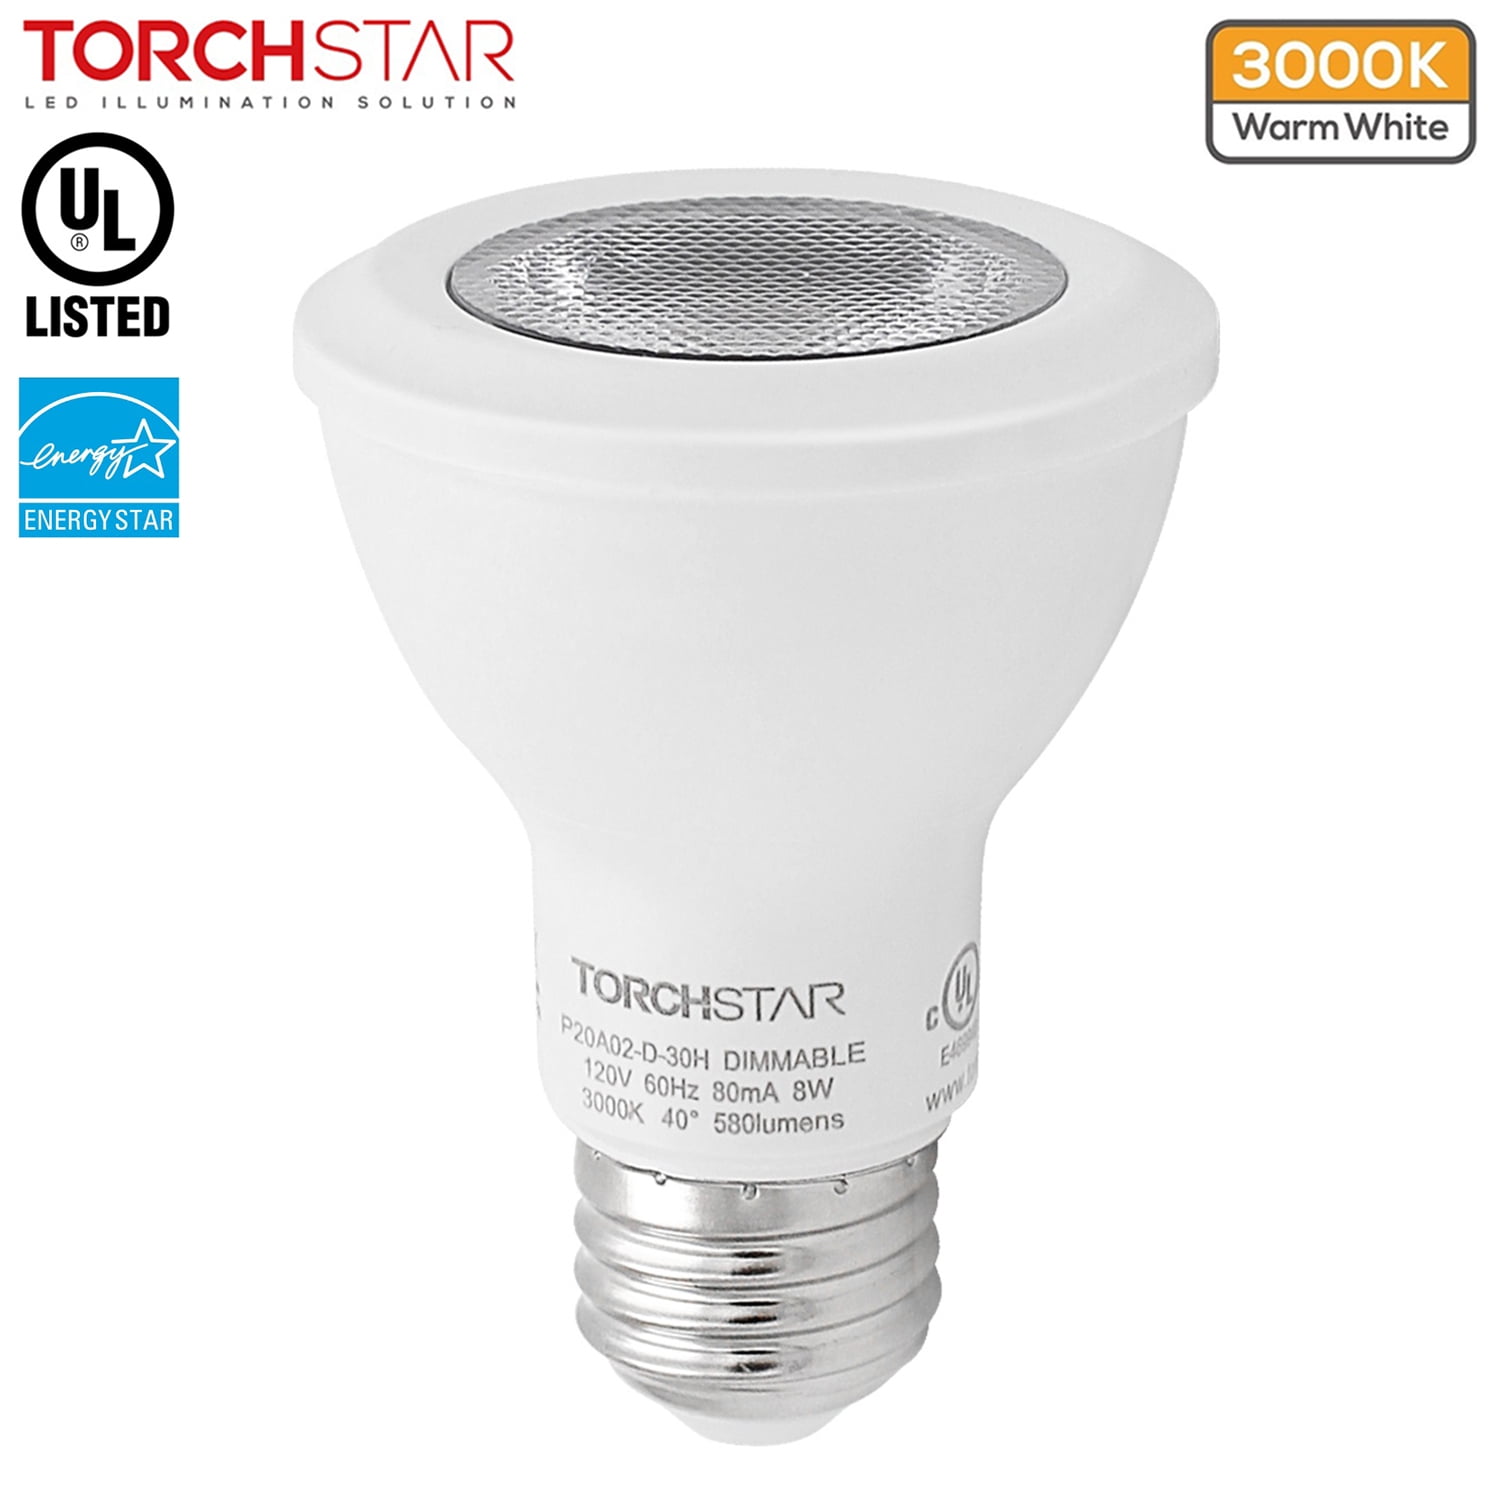 TorchStar Dimmable PAR20 LED Light Bulbs for Recessed, Landscape